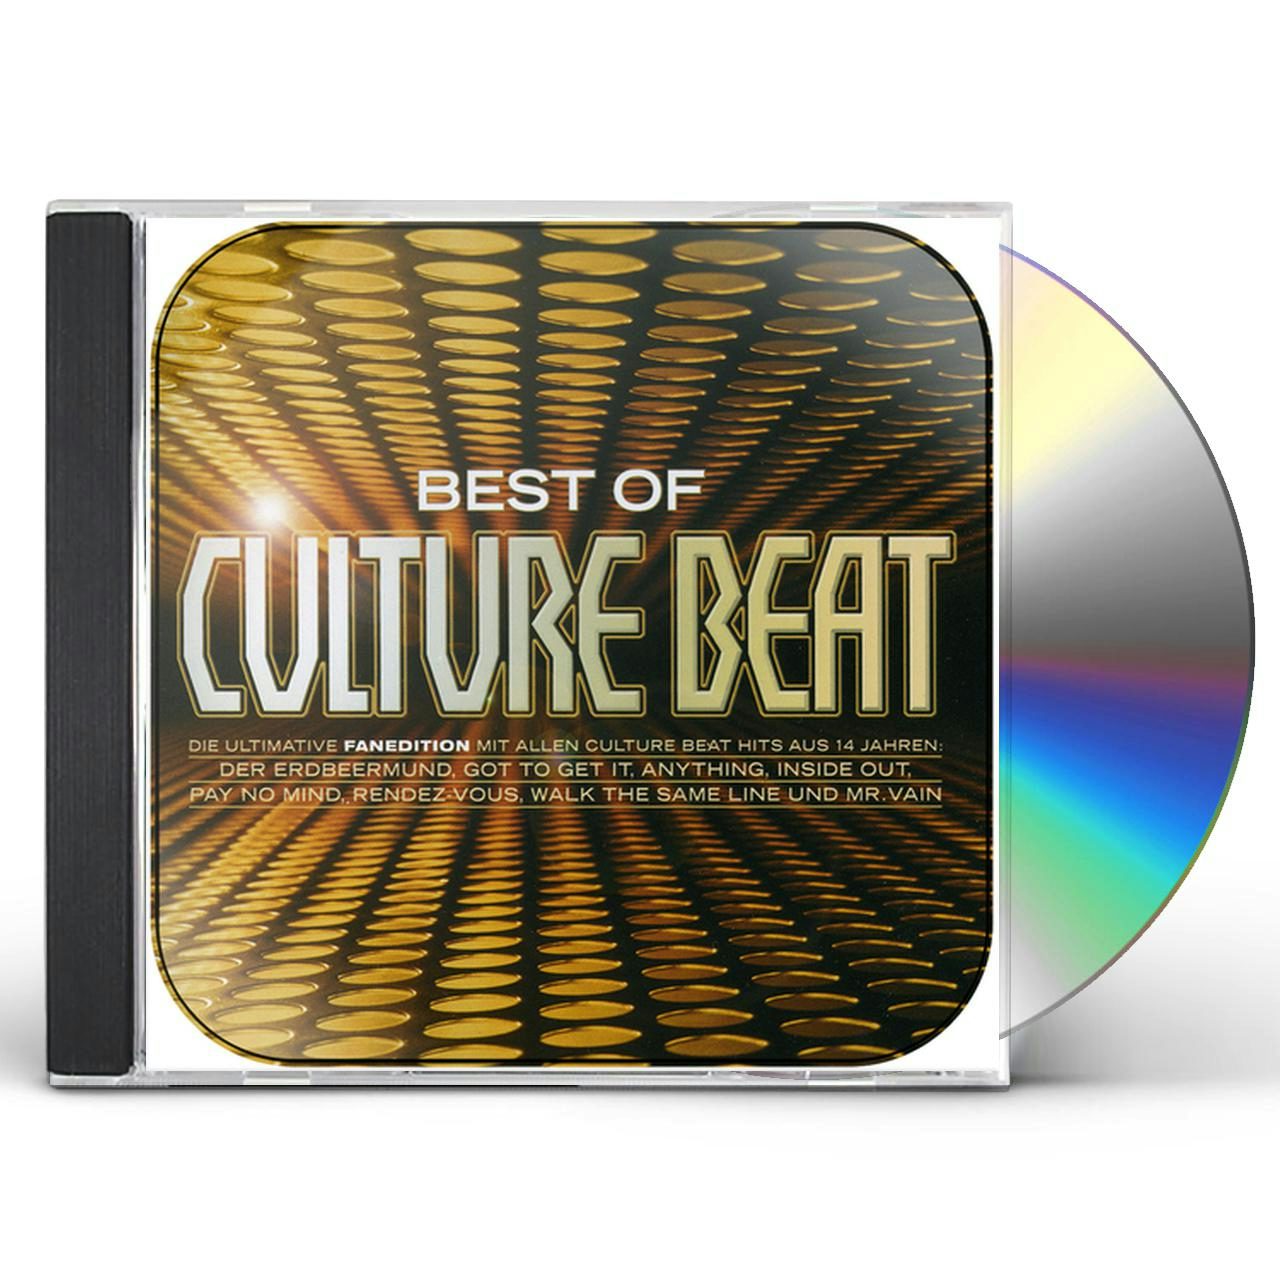 BEST OF CD - Culture Beat